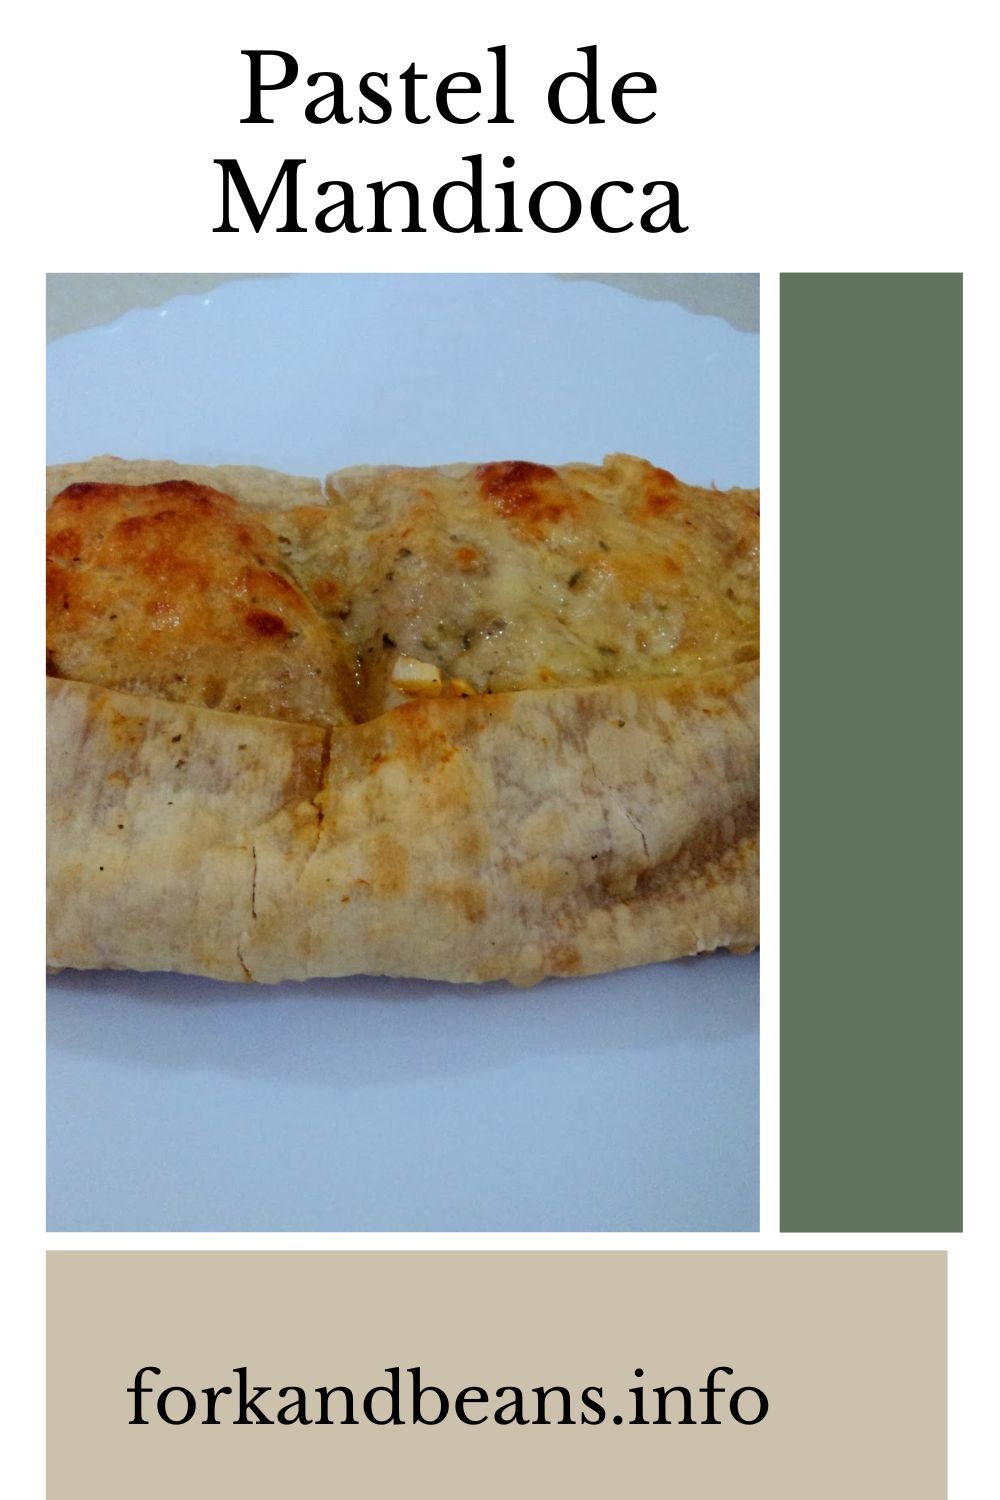 Cassava pie topped with jerky